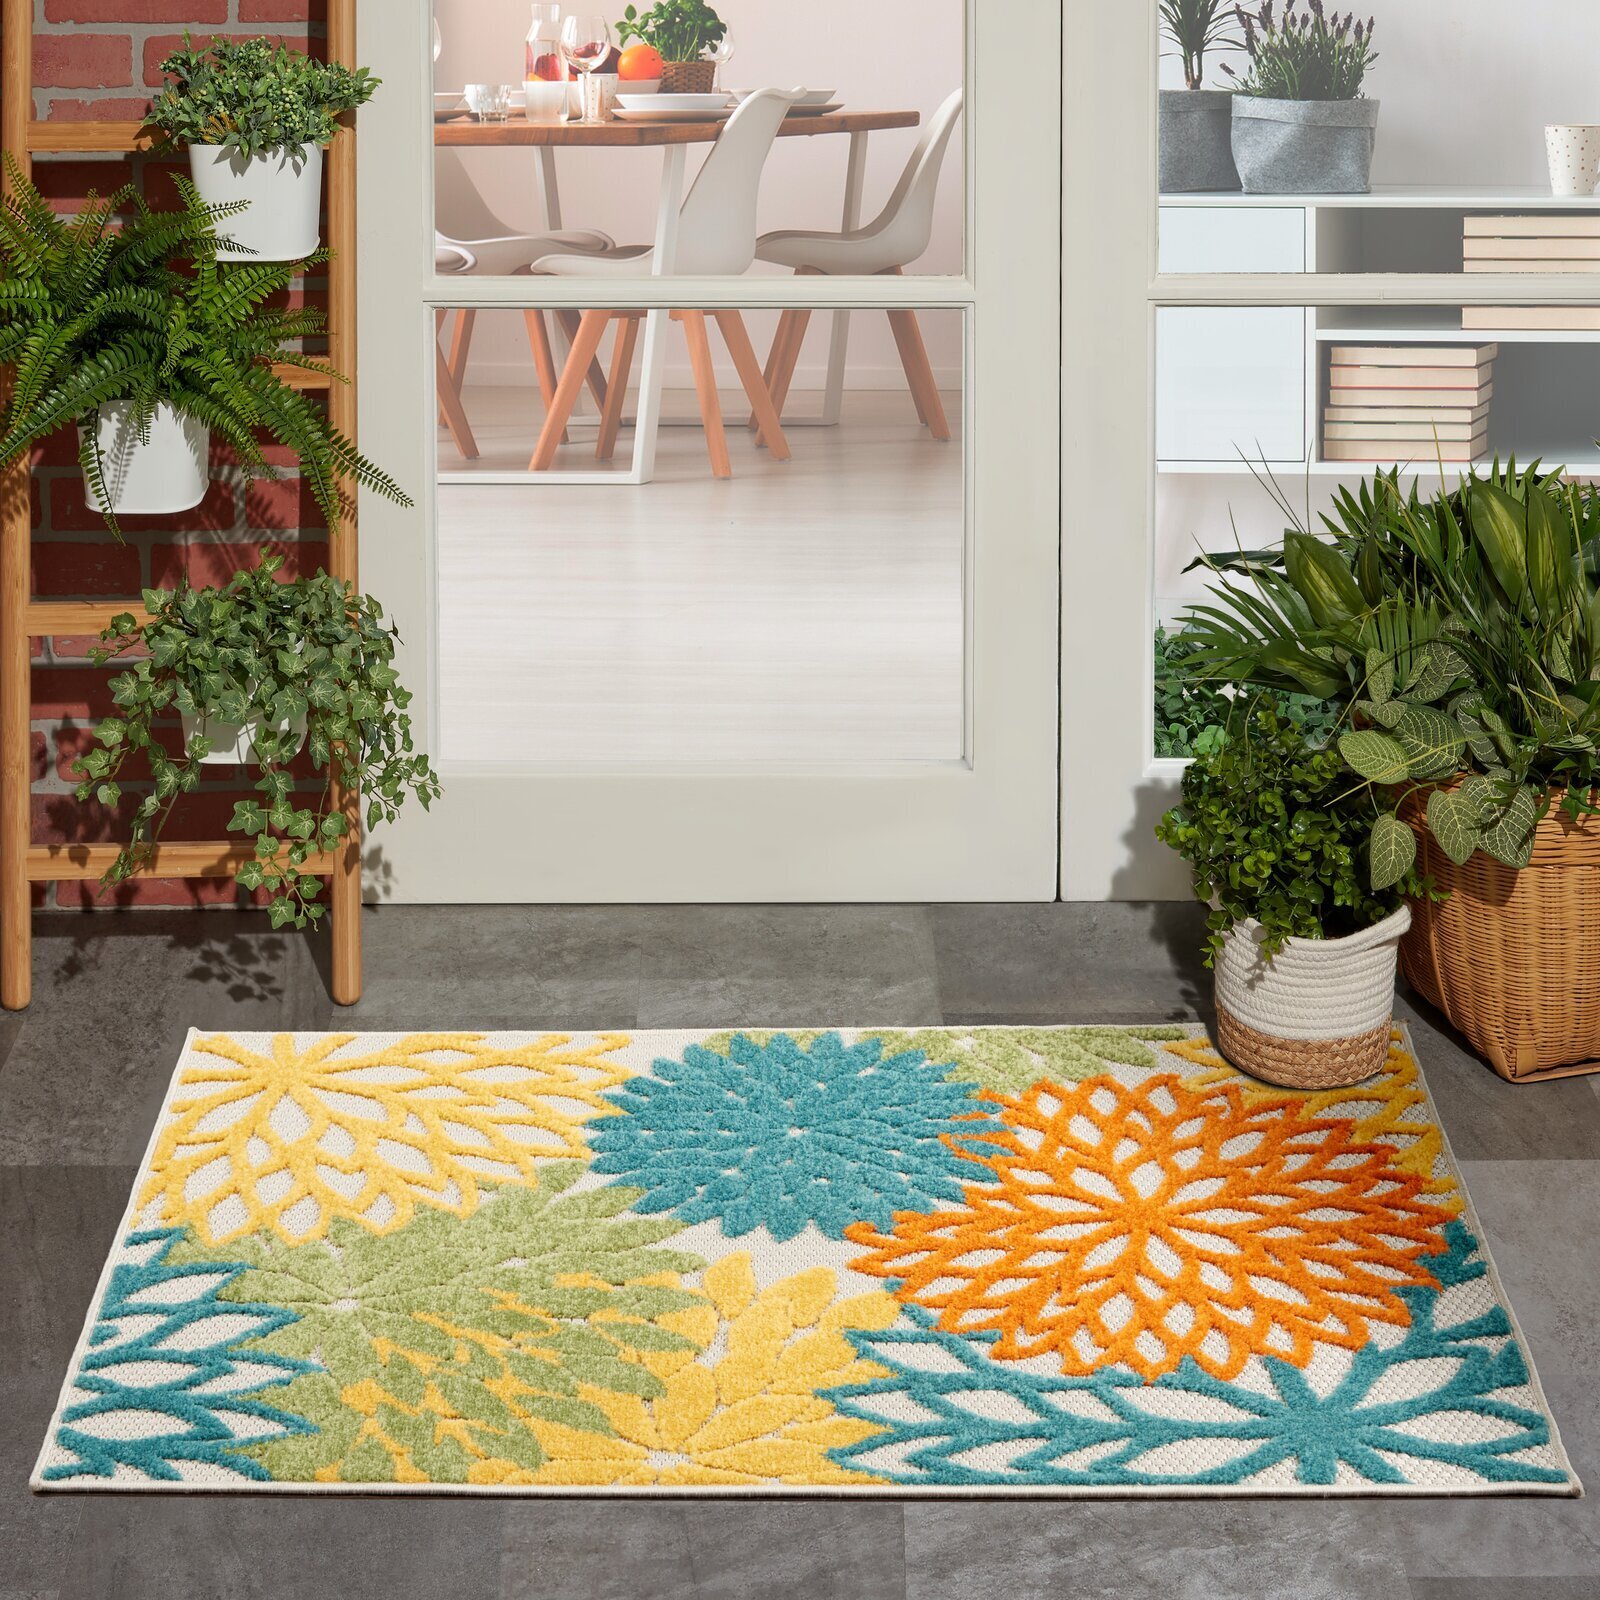 Flatweave colorful outdoor rug